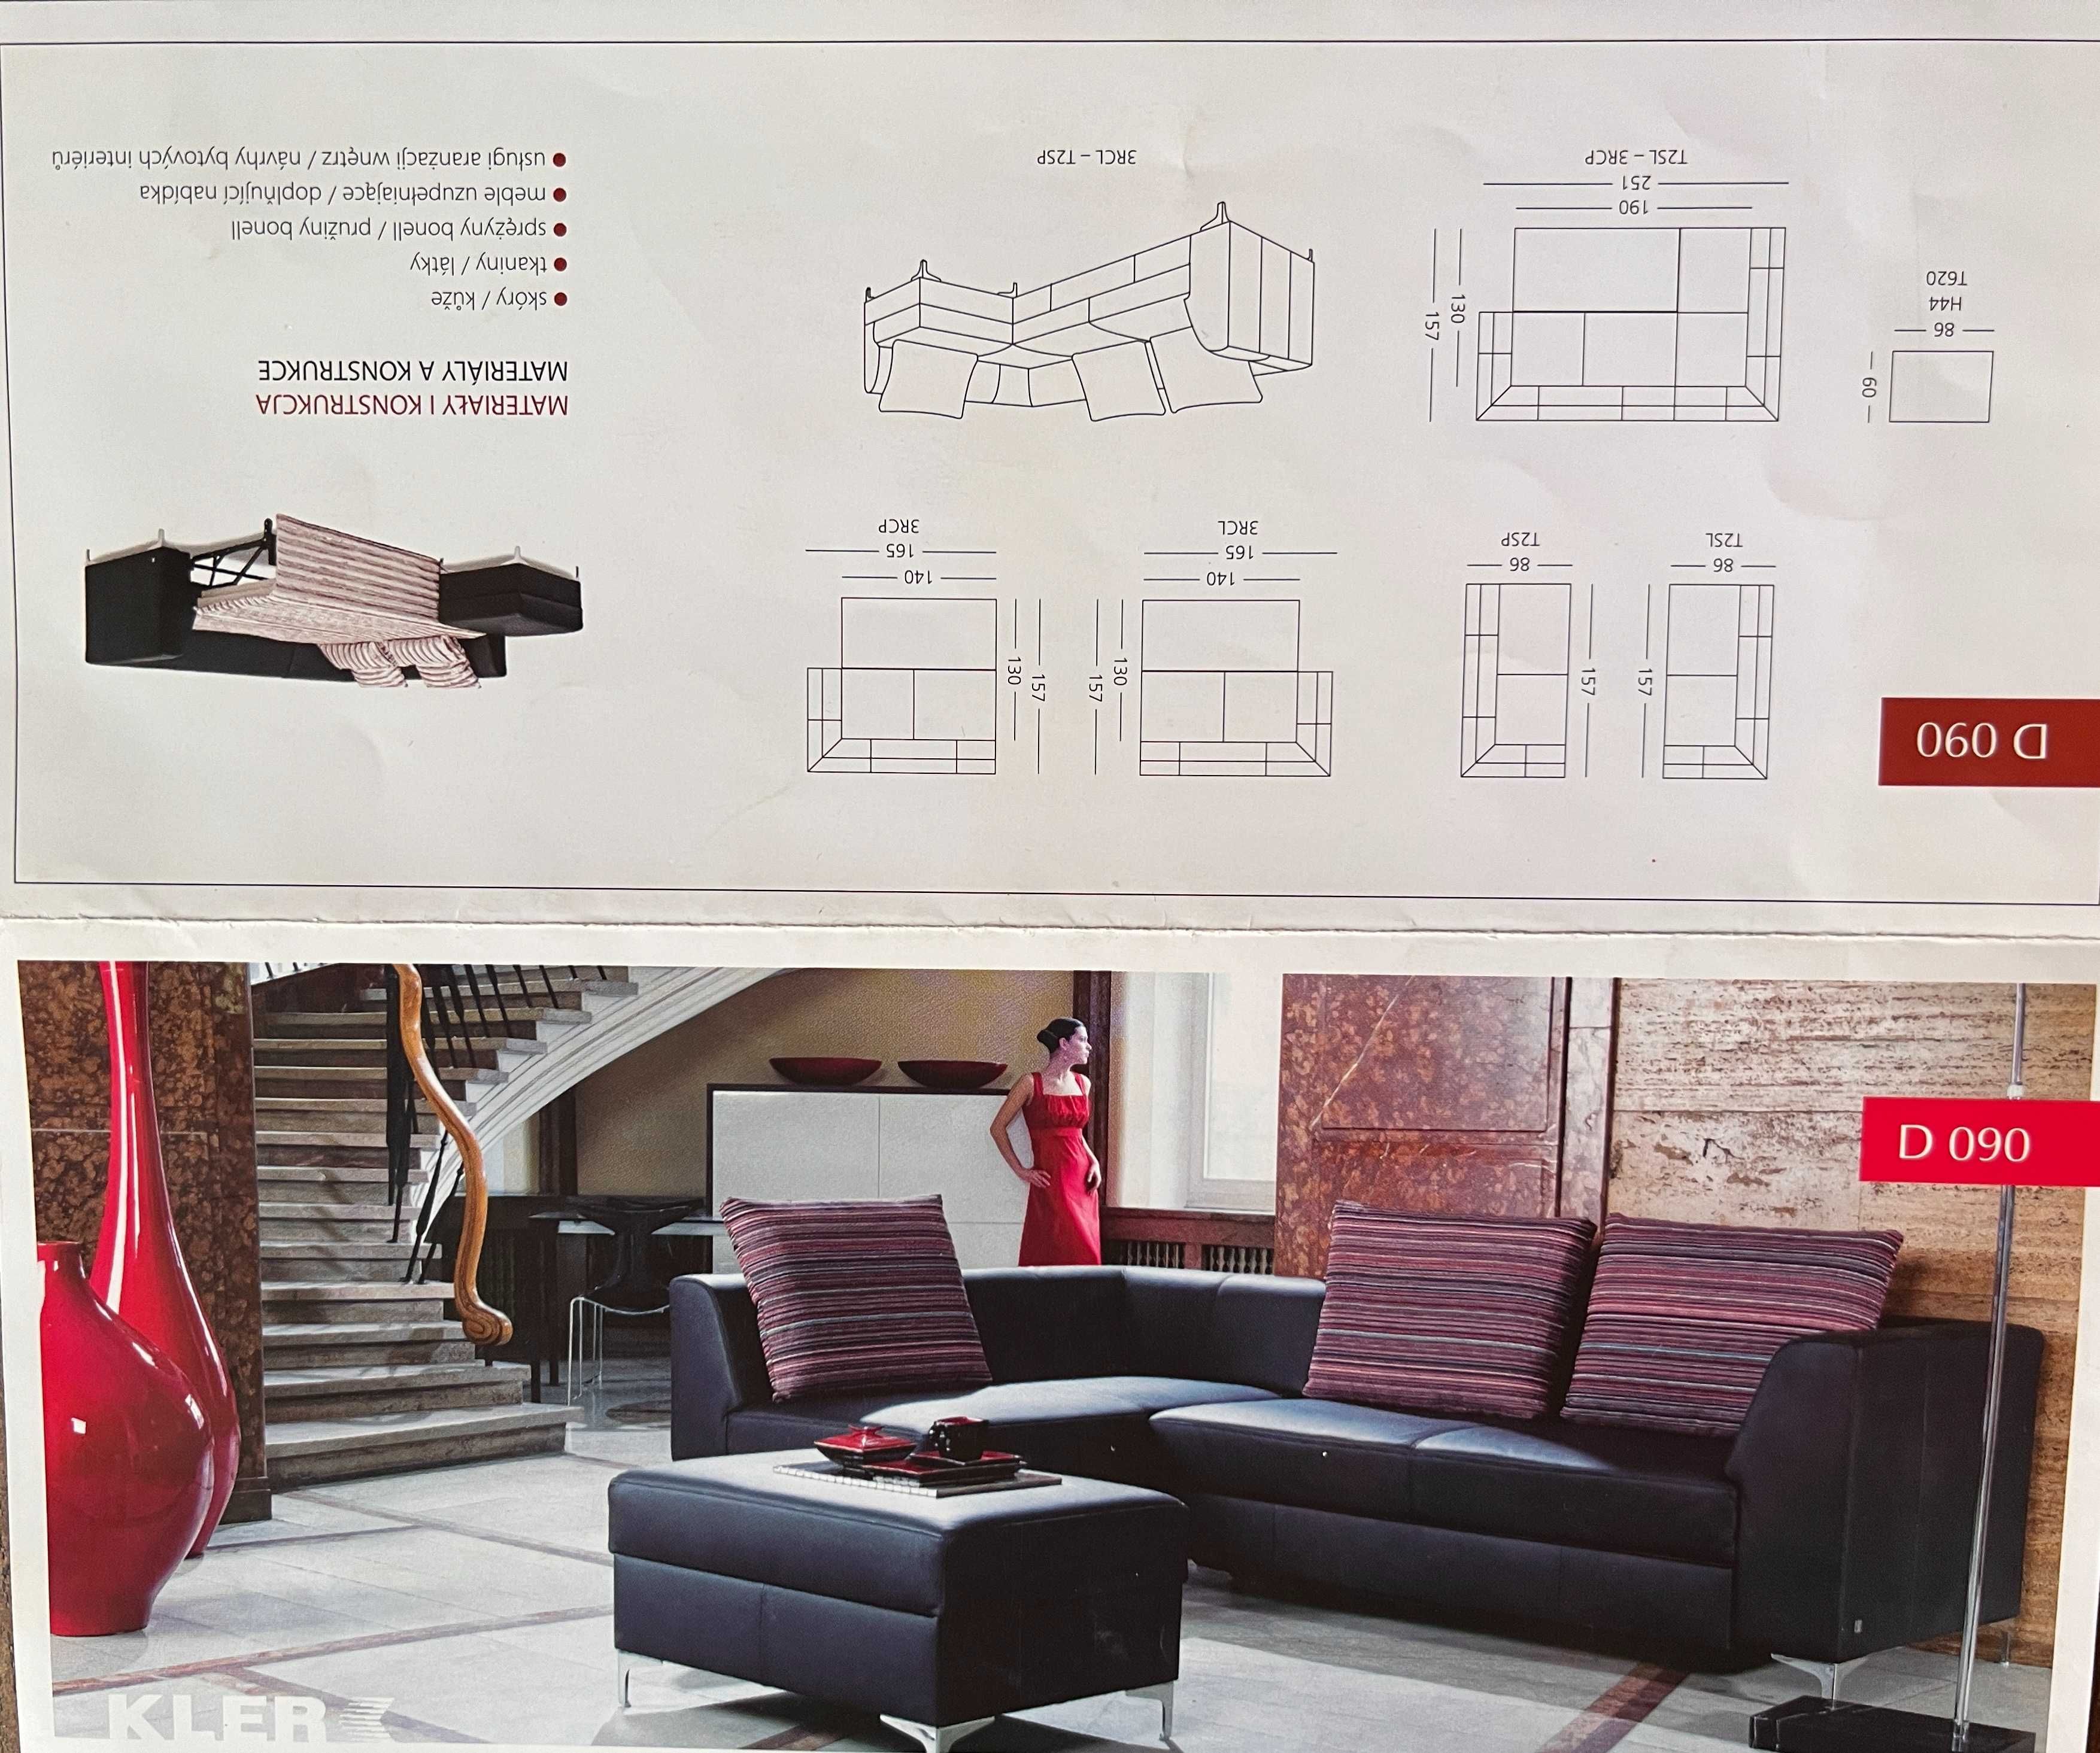 Kler D090 sofa kanapa funkcja spania, skóra, tkanina, zadbany.